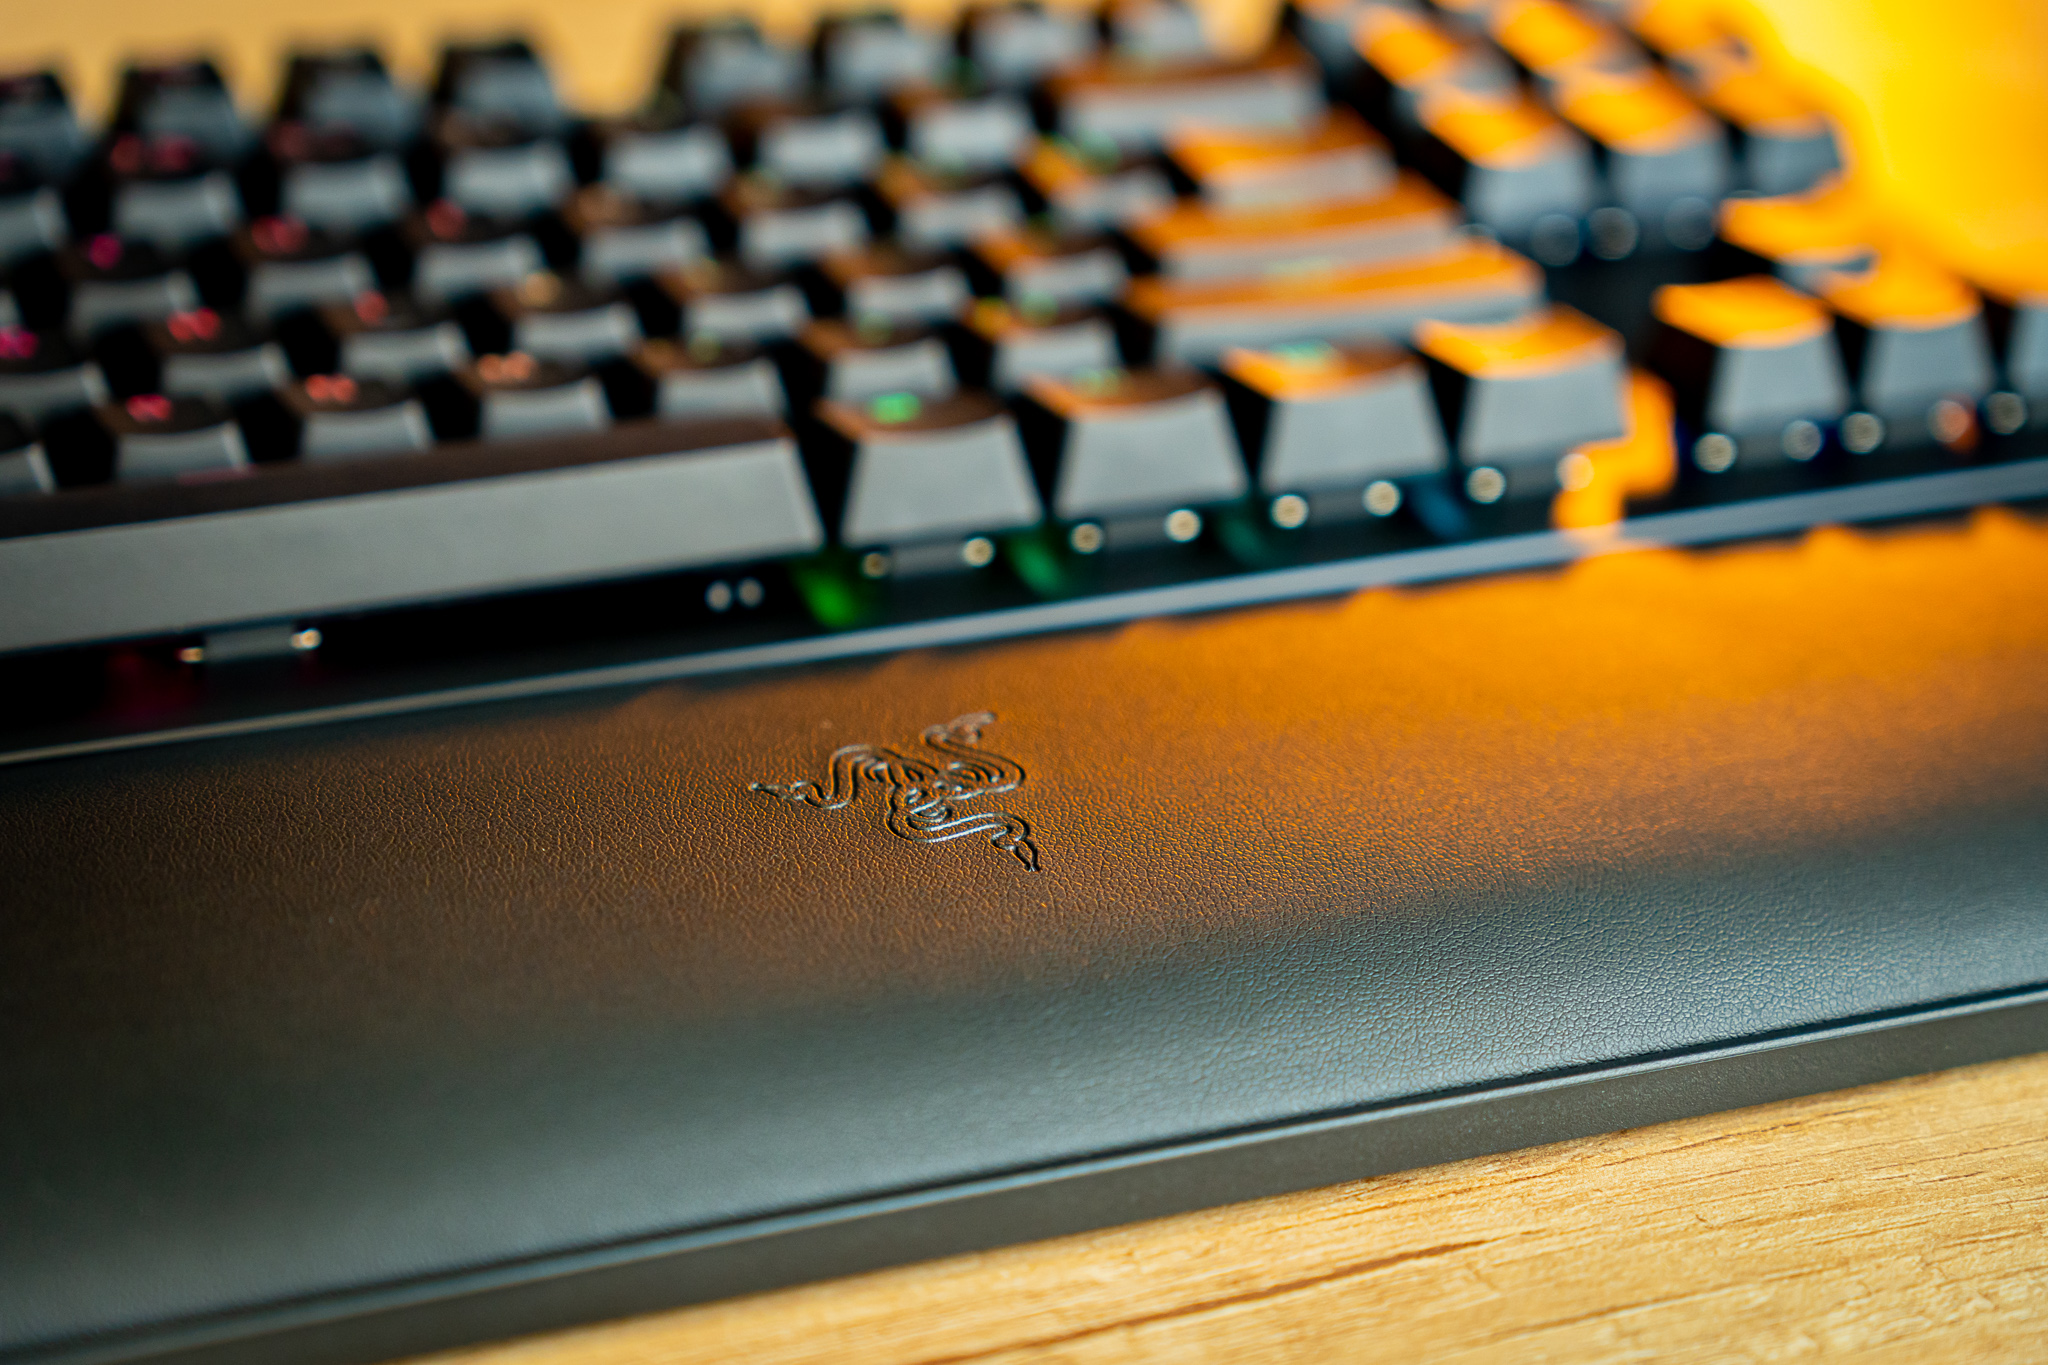 Razer Huntsman Mini Special Edition Keyboard 60% Optical Gaming-Green Key  Caps